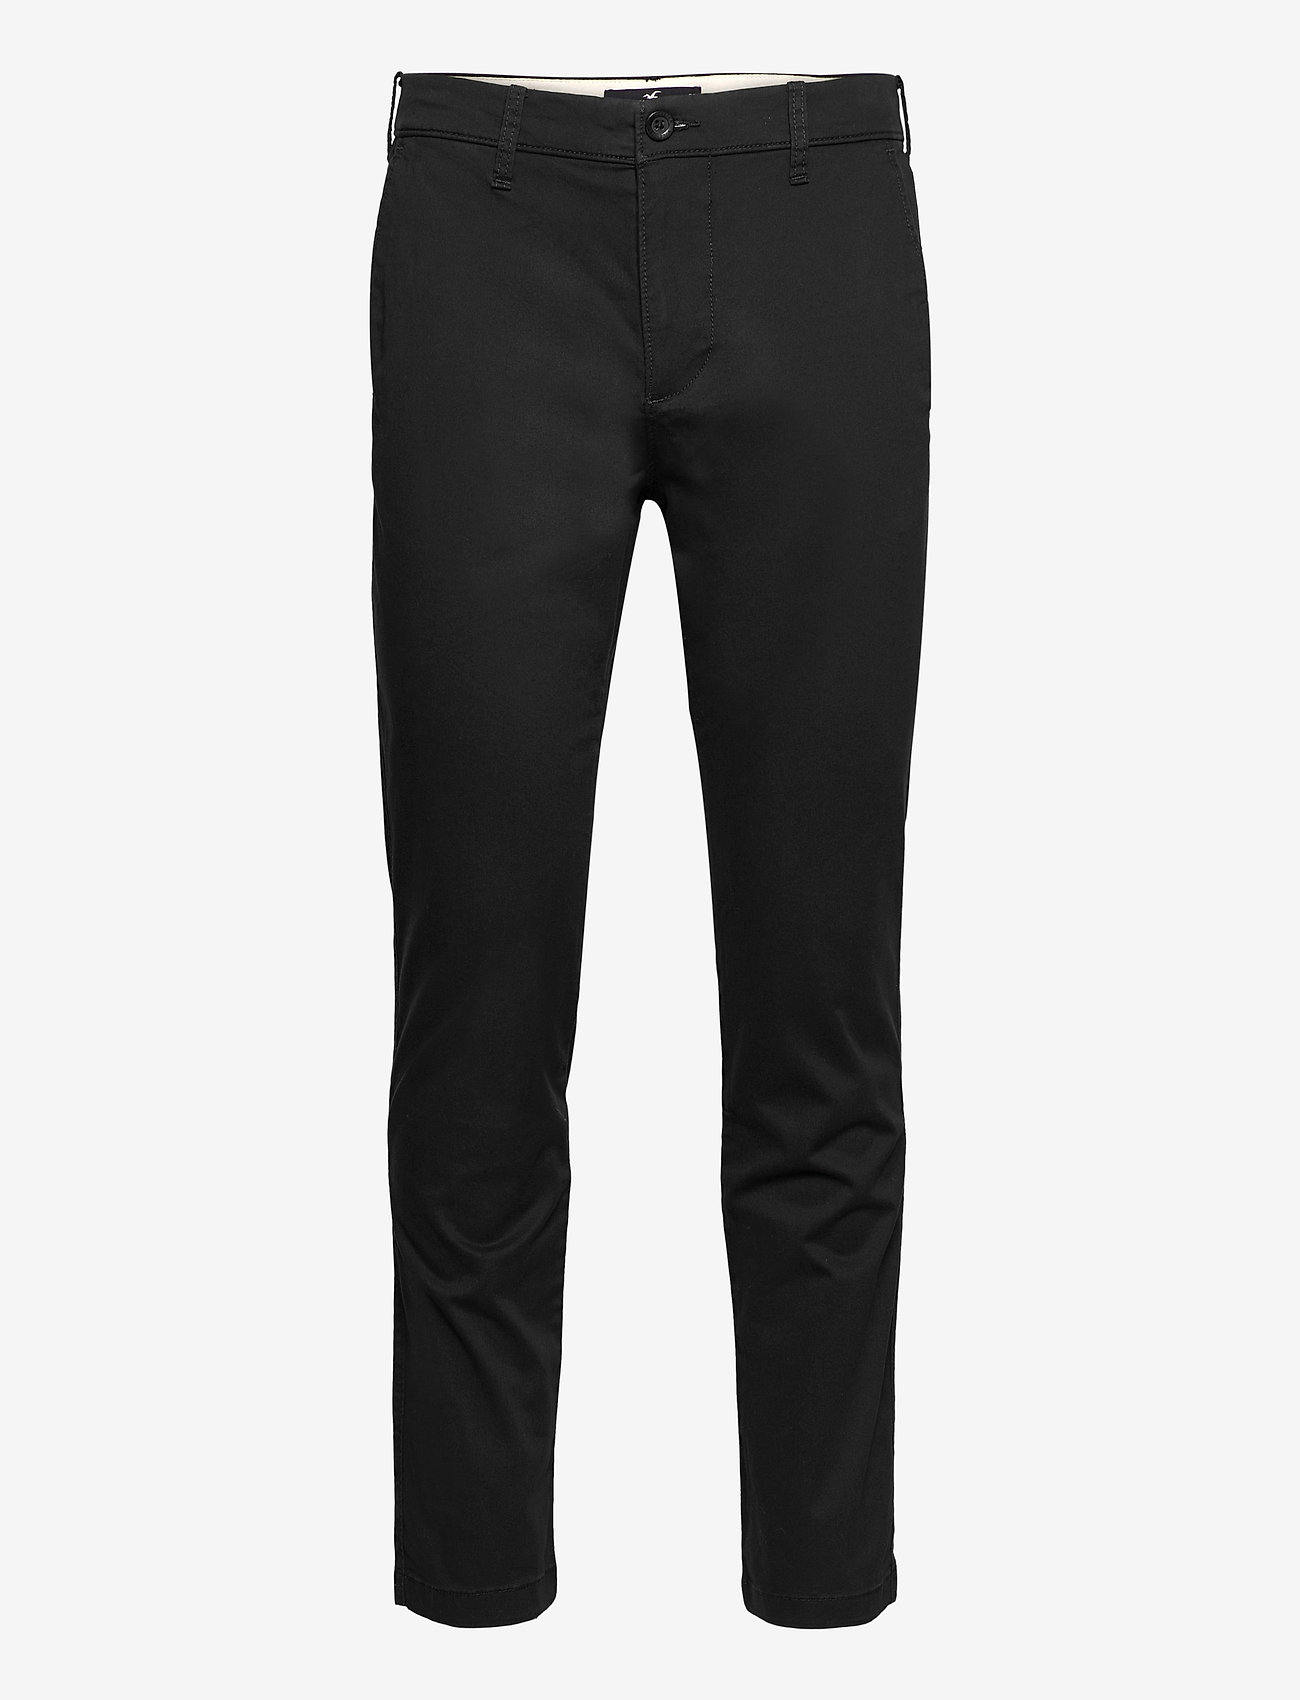 hollister black trousers